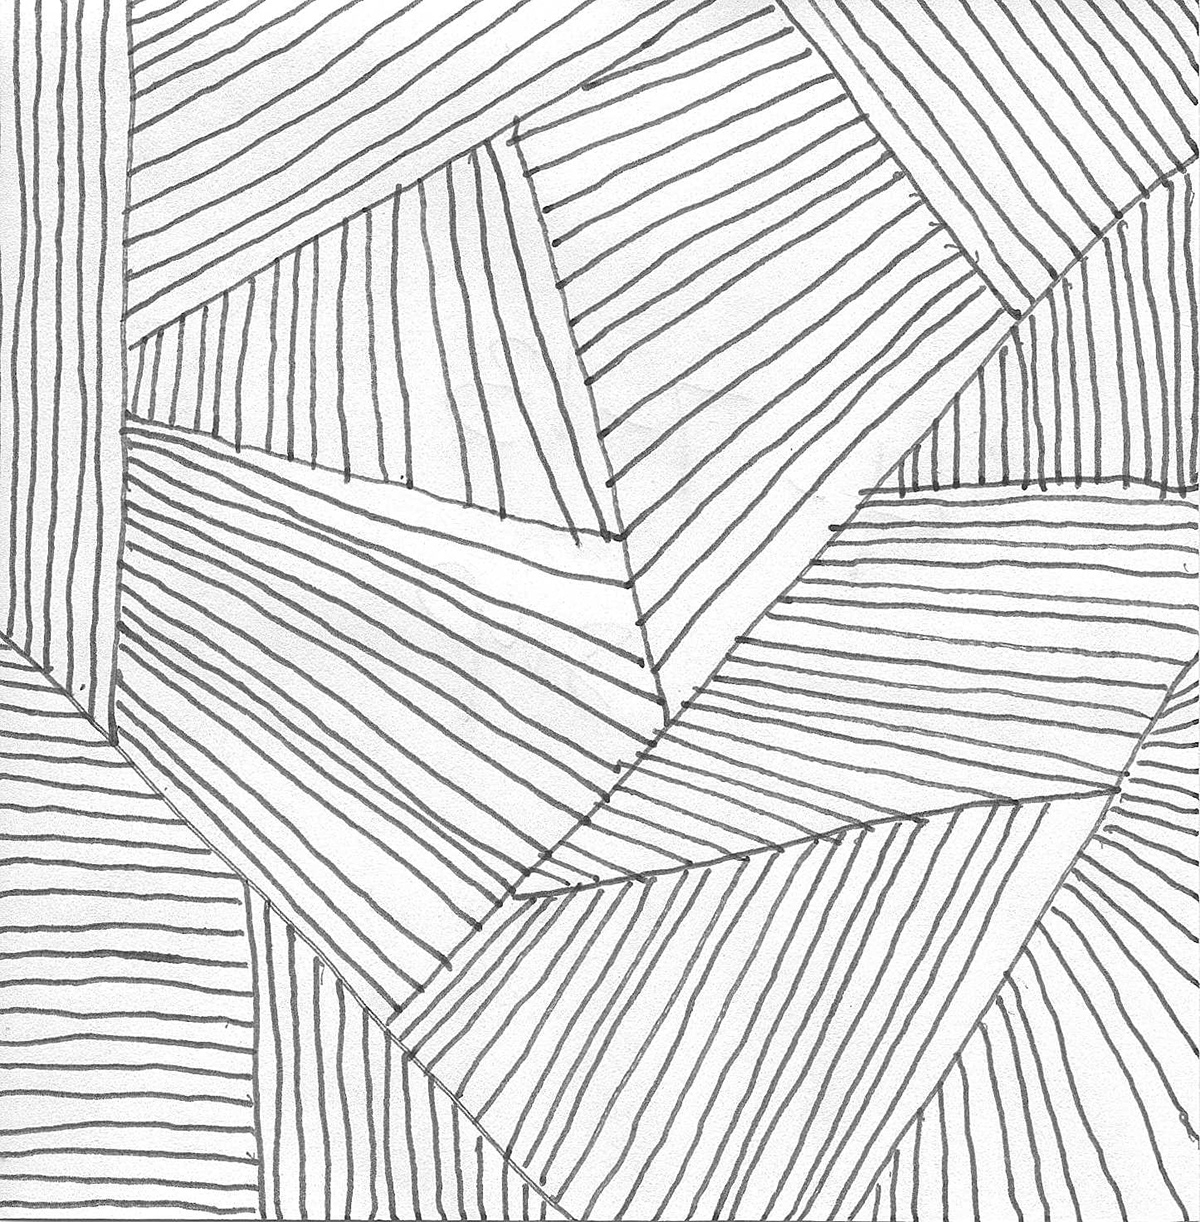 sketch sketching doodle doodling pencil pen ink inking pattern play Pet quick relaxing